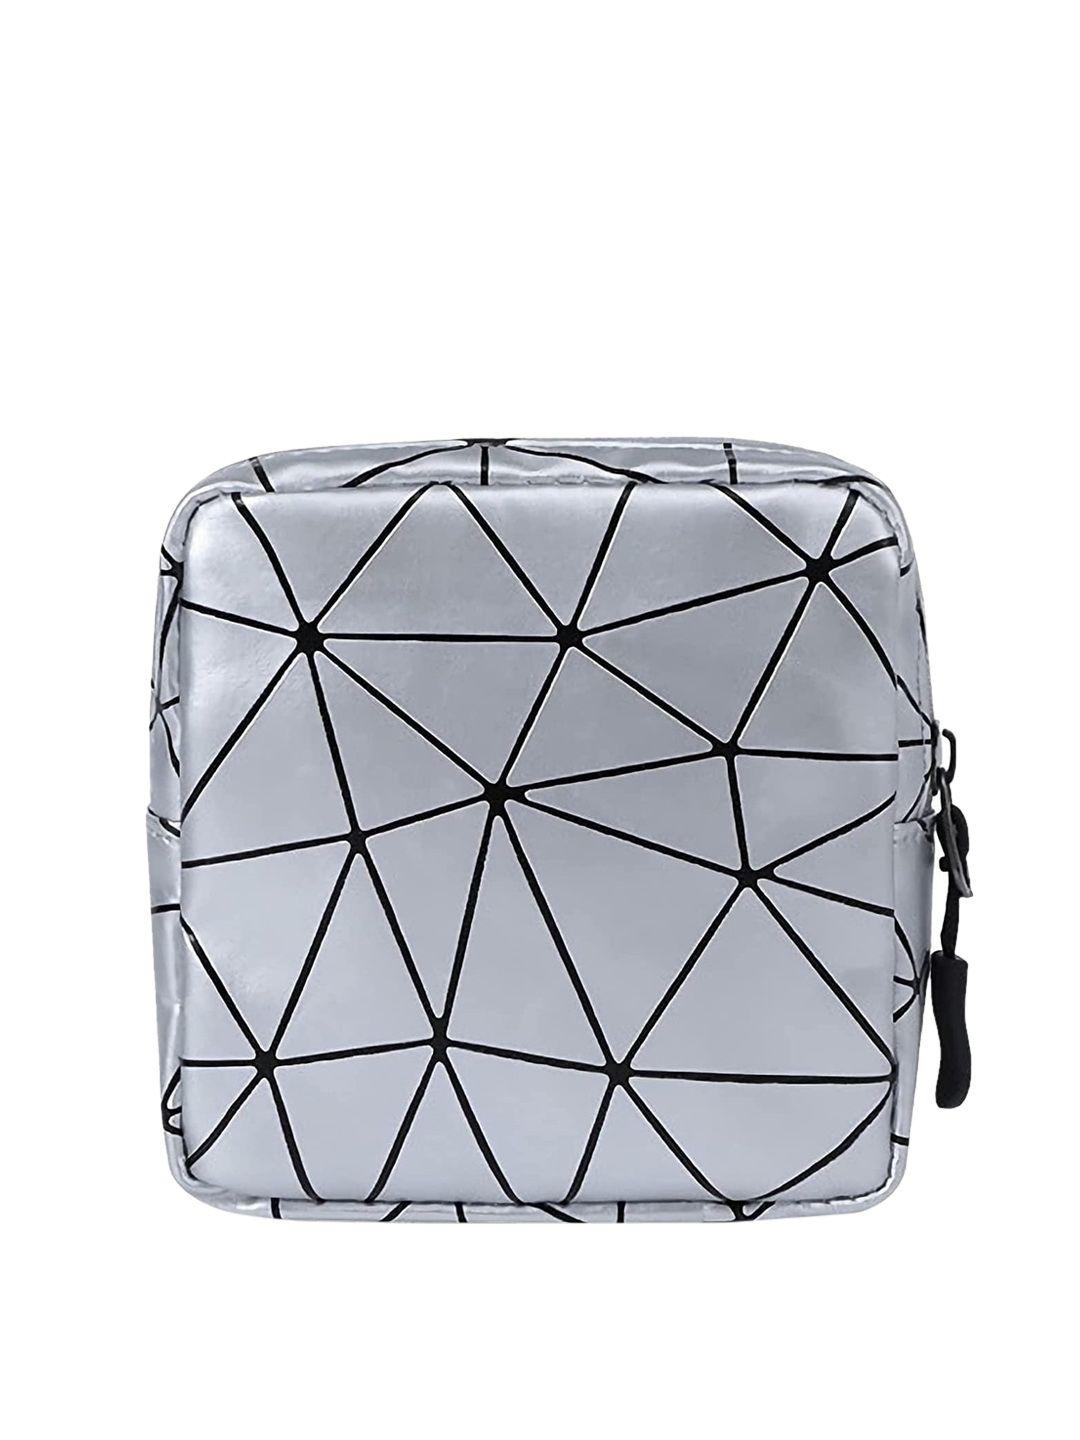 awestuffs geometric printed portable travel pouch